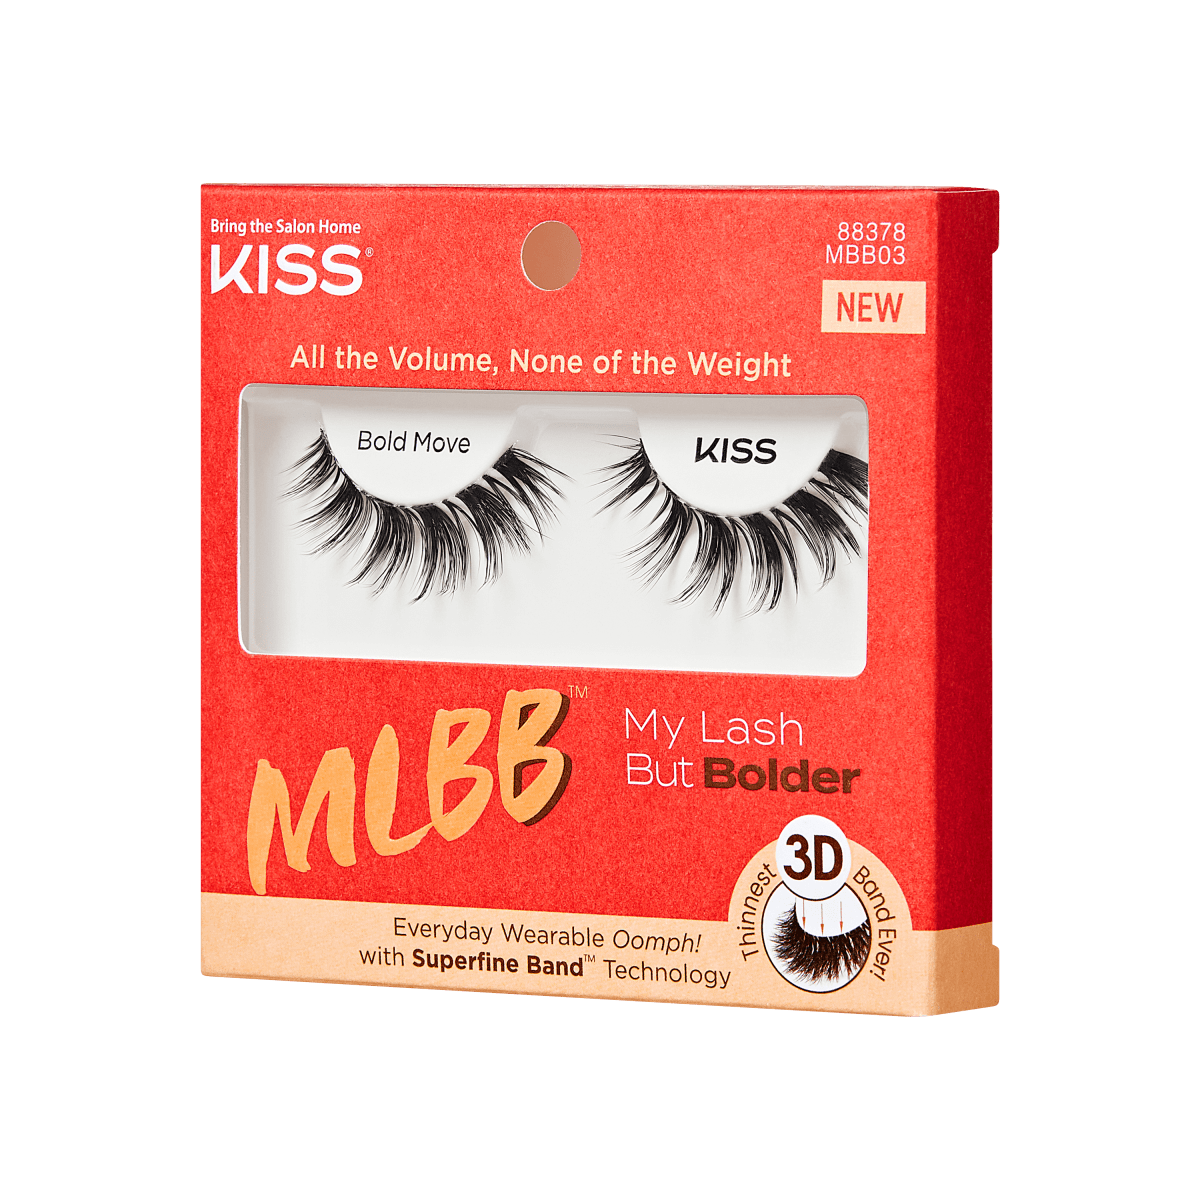 KISS My Lash But Bolder 3D Volume Eyelashes - Bold Move